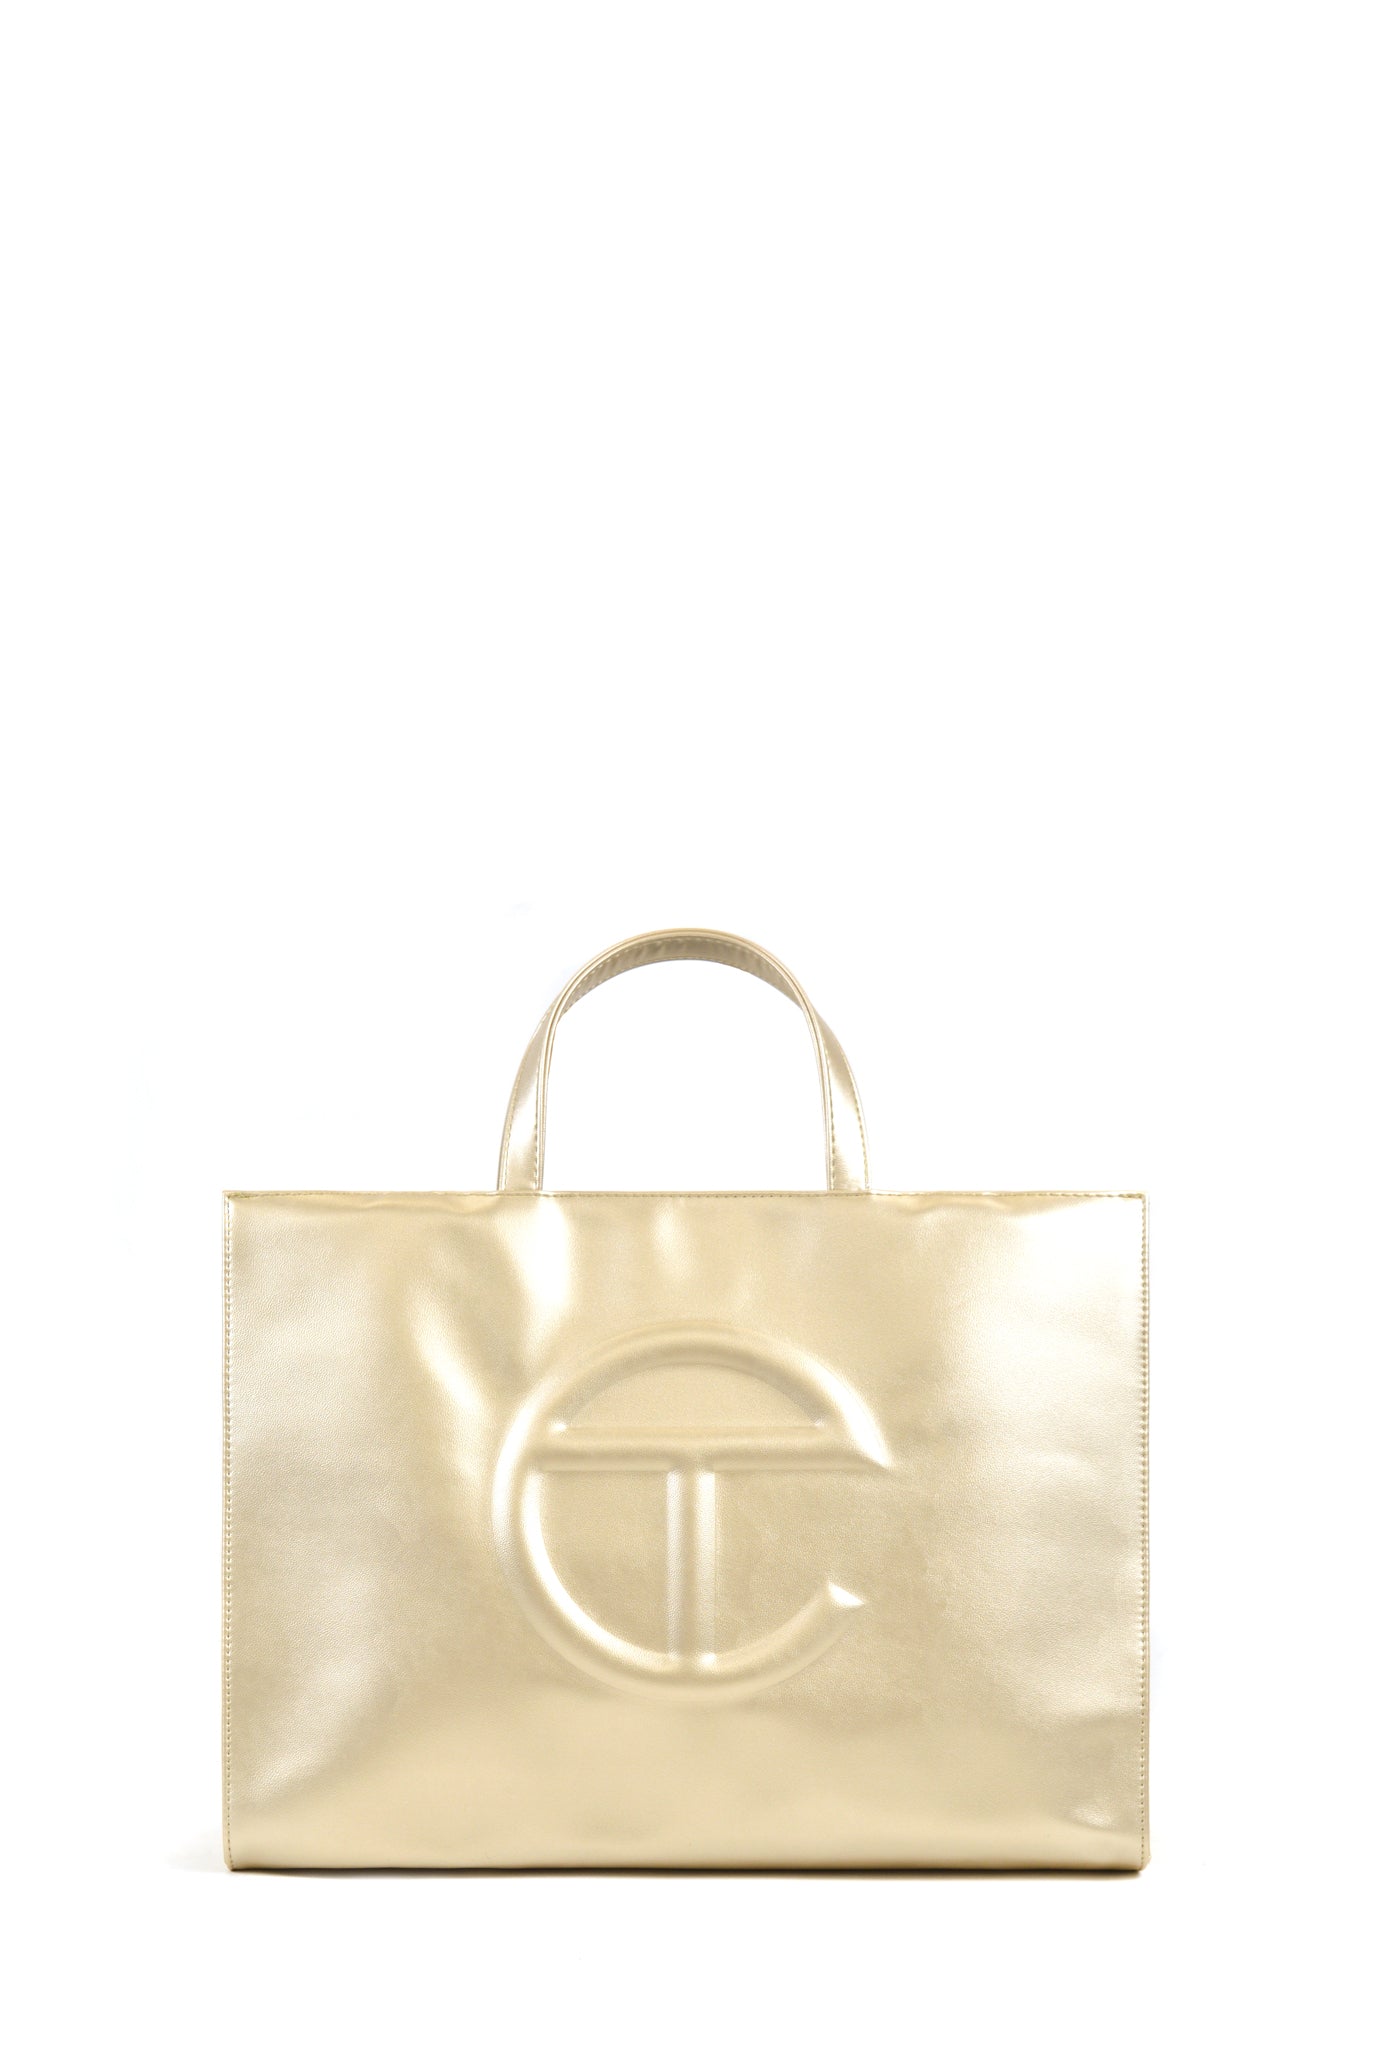 Telfar Medium Shopping Bag, Gold